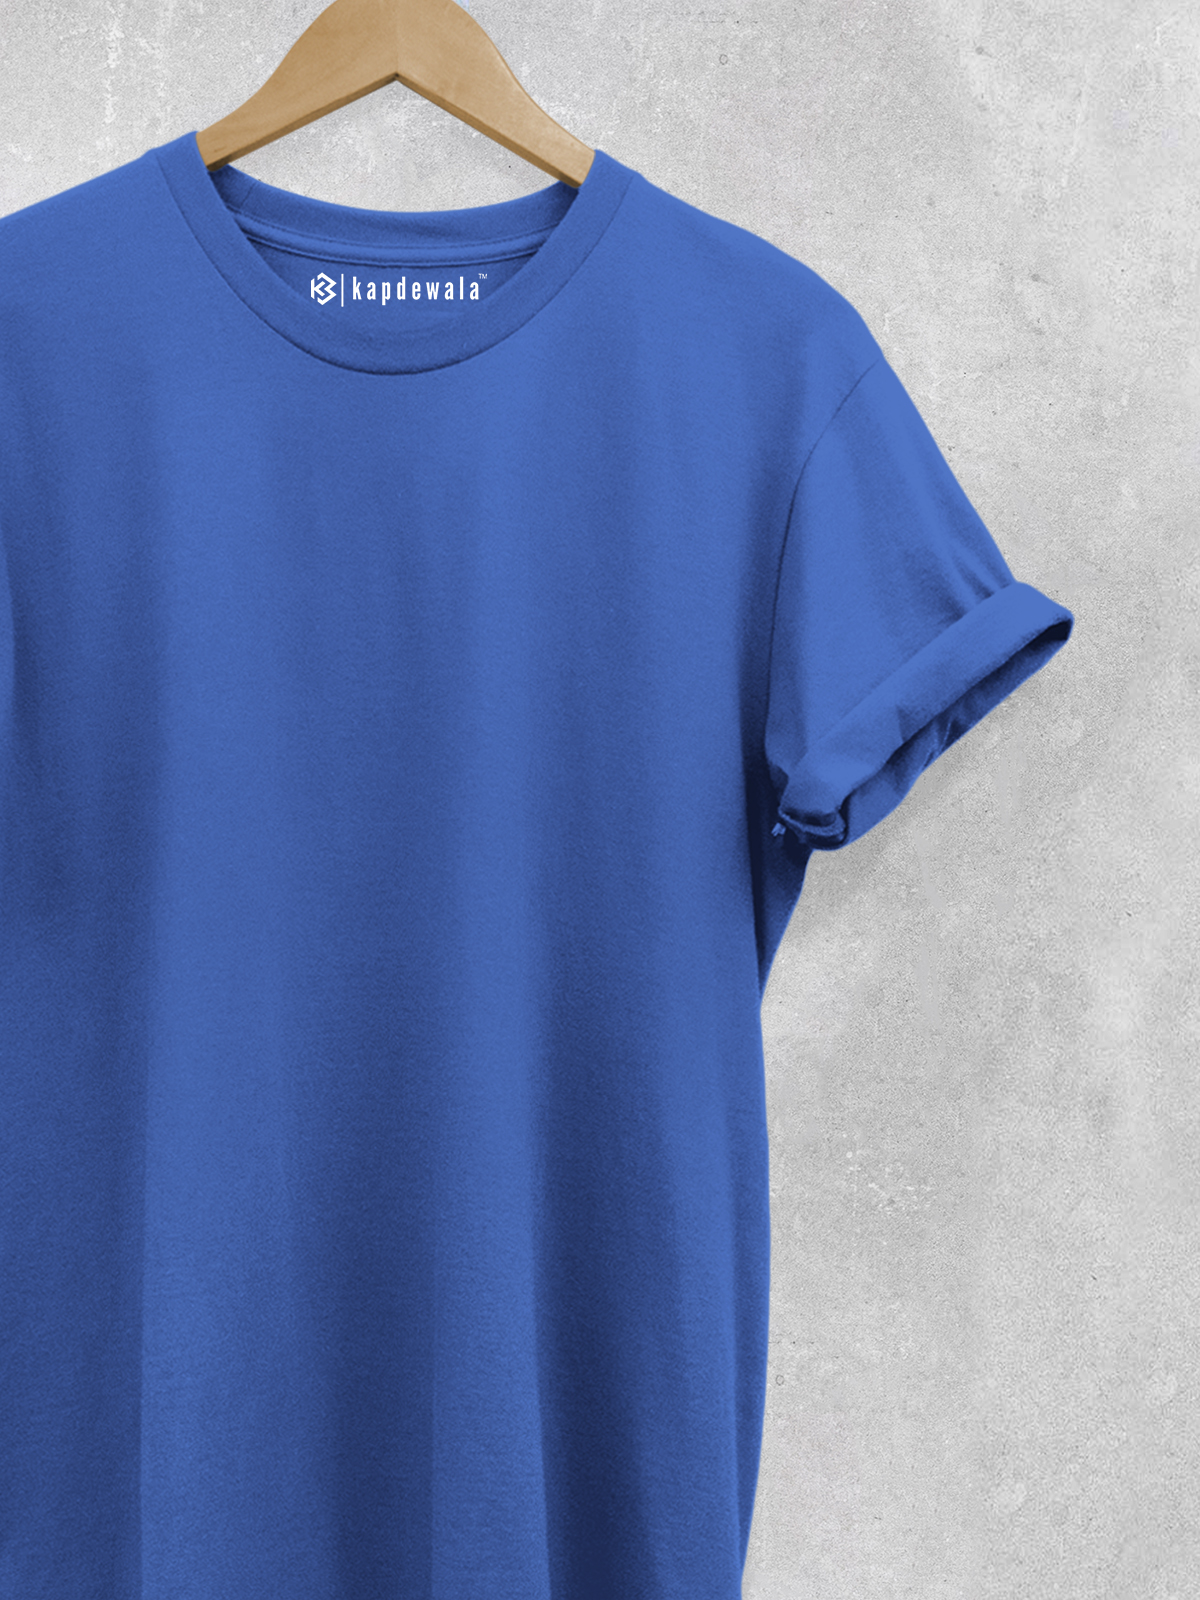 Kapdewala Plain Royal Blue Men's T-Shirt | Kapdewala